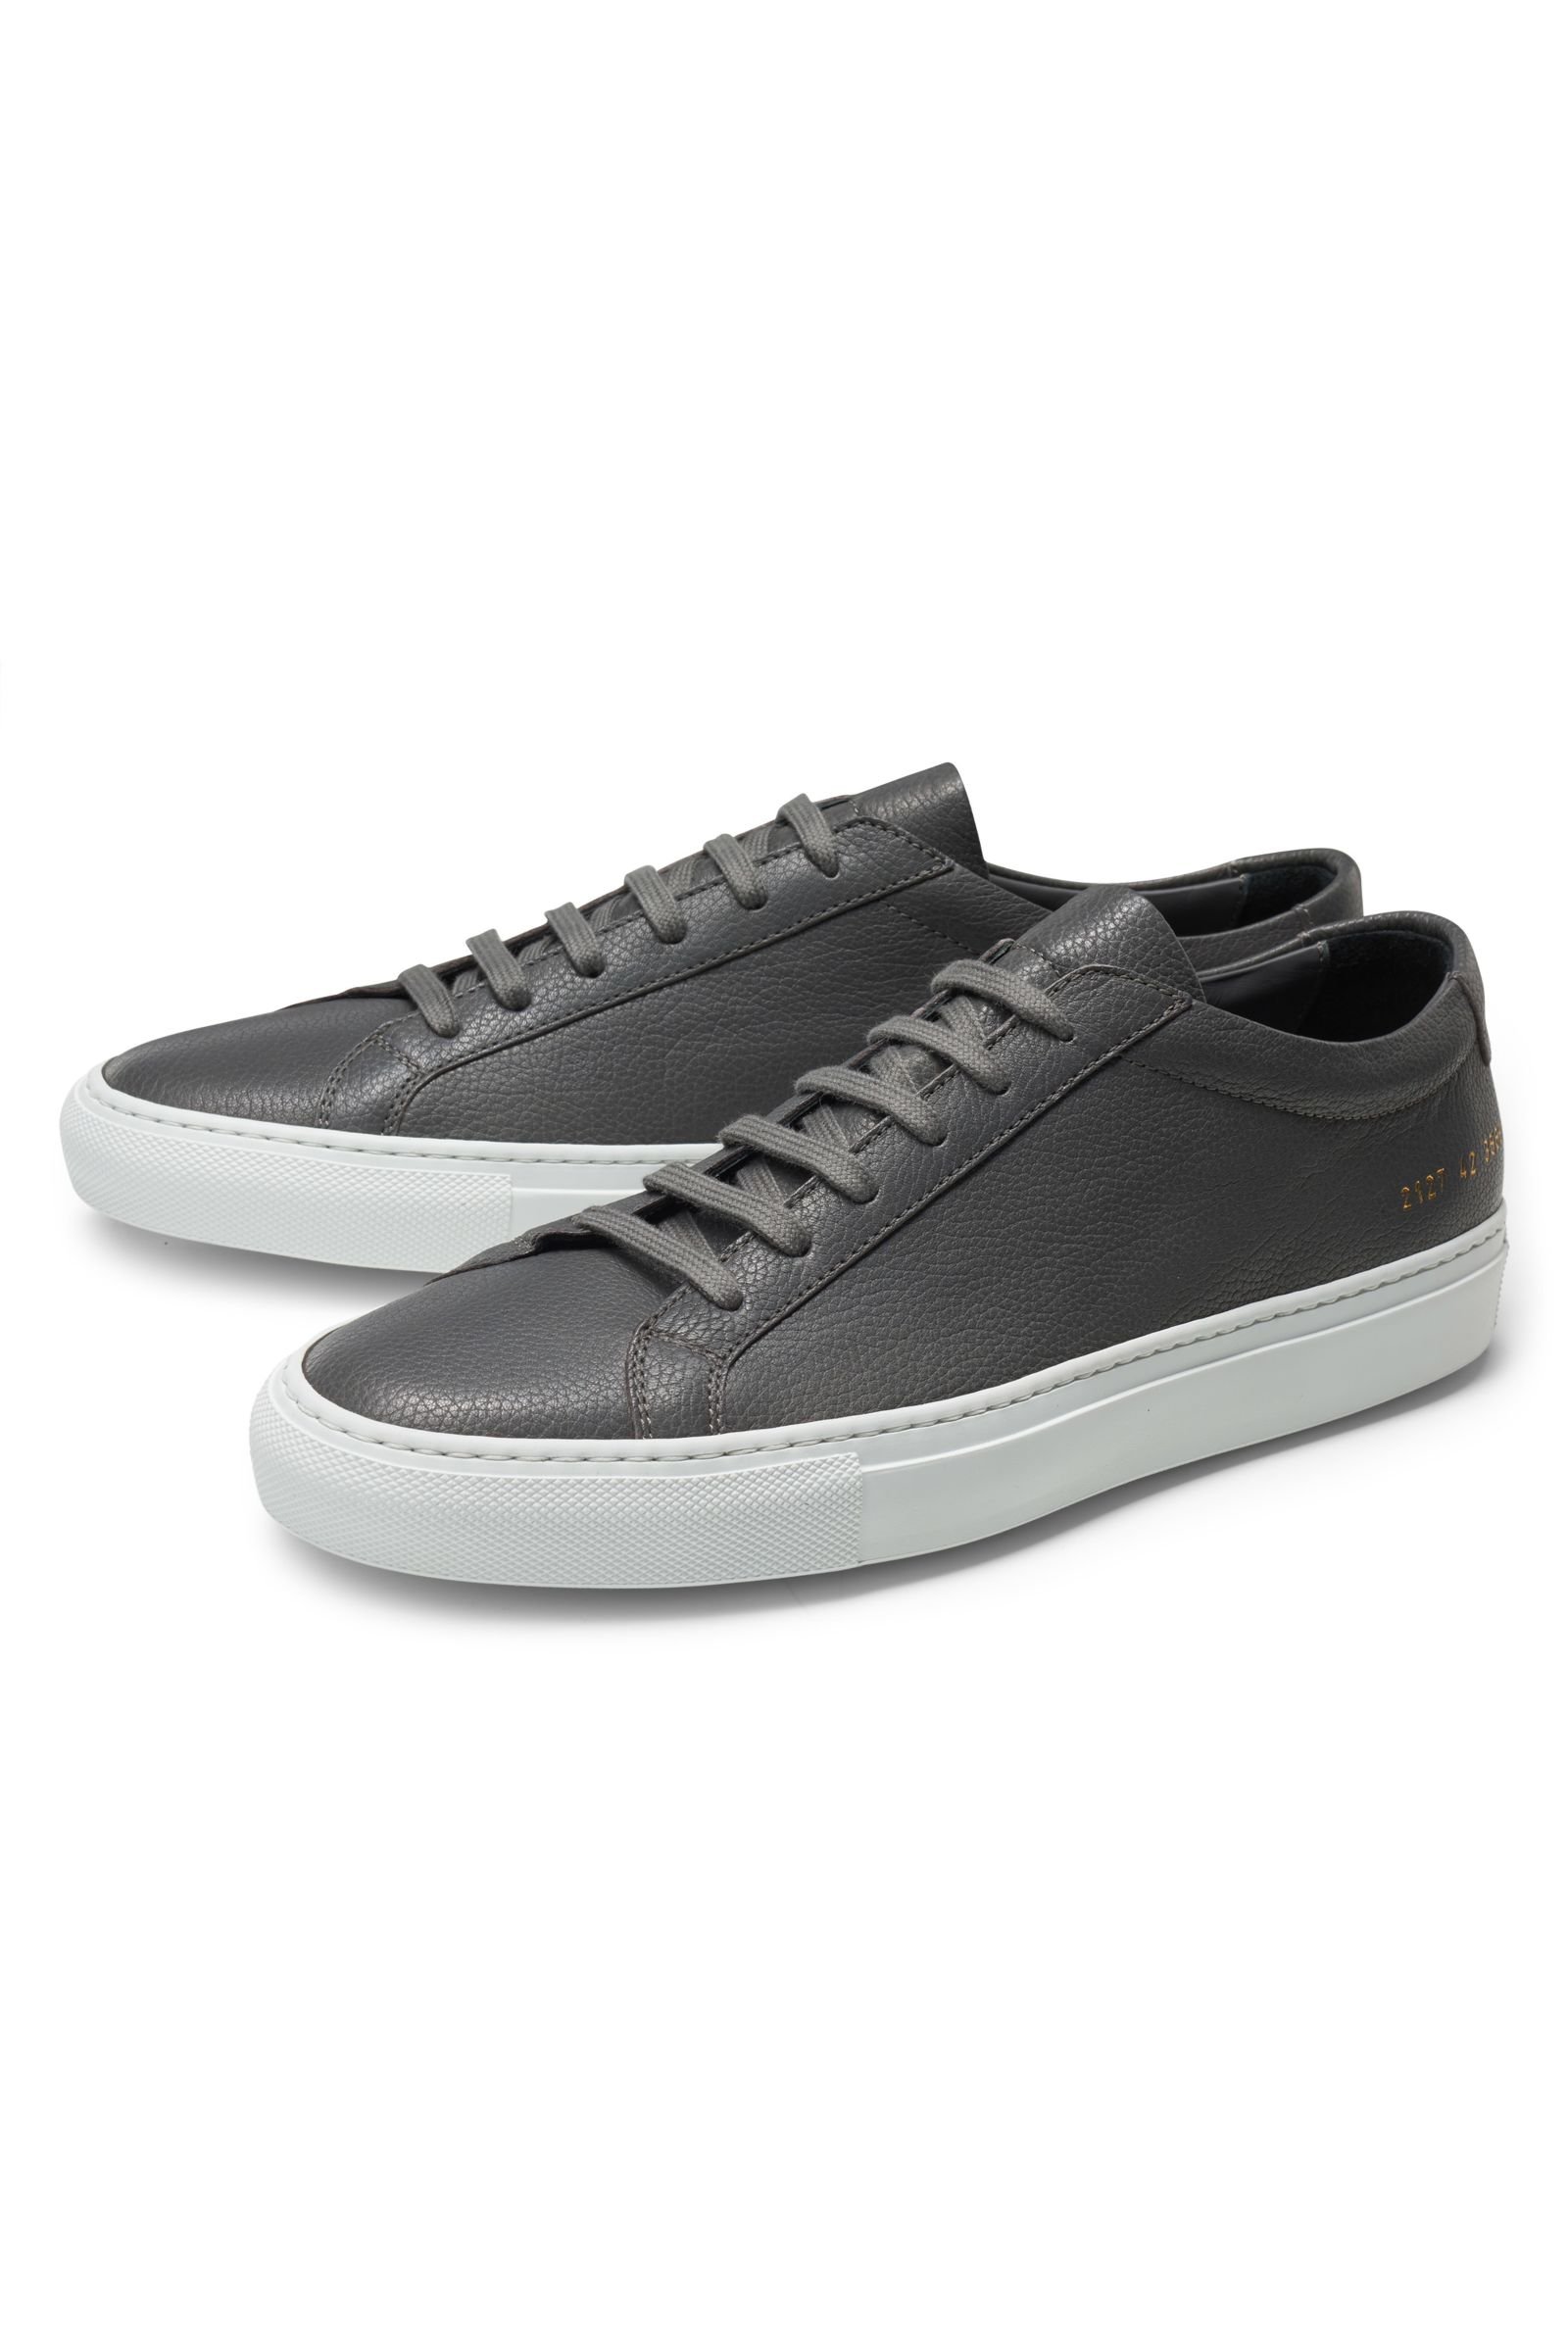 'Original Achilles' sneakers in dark grey